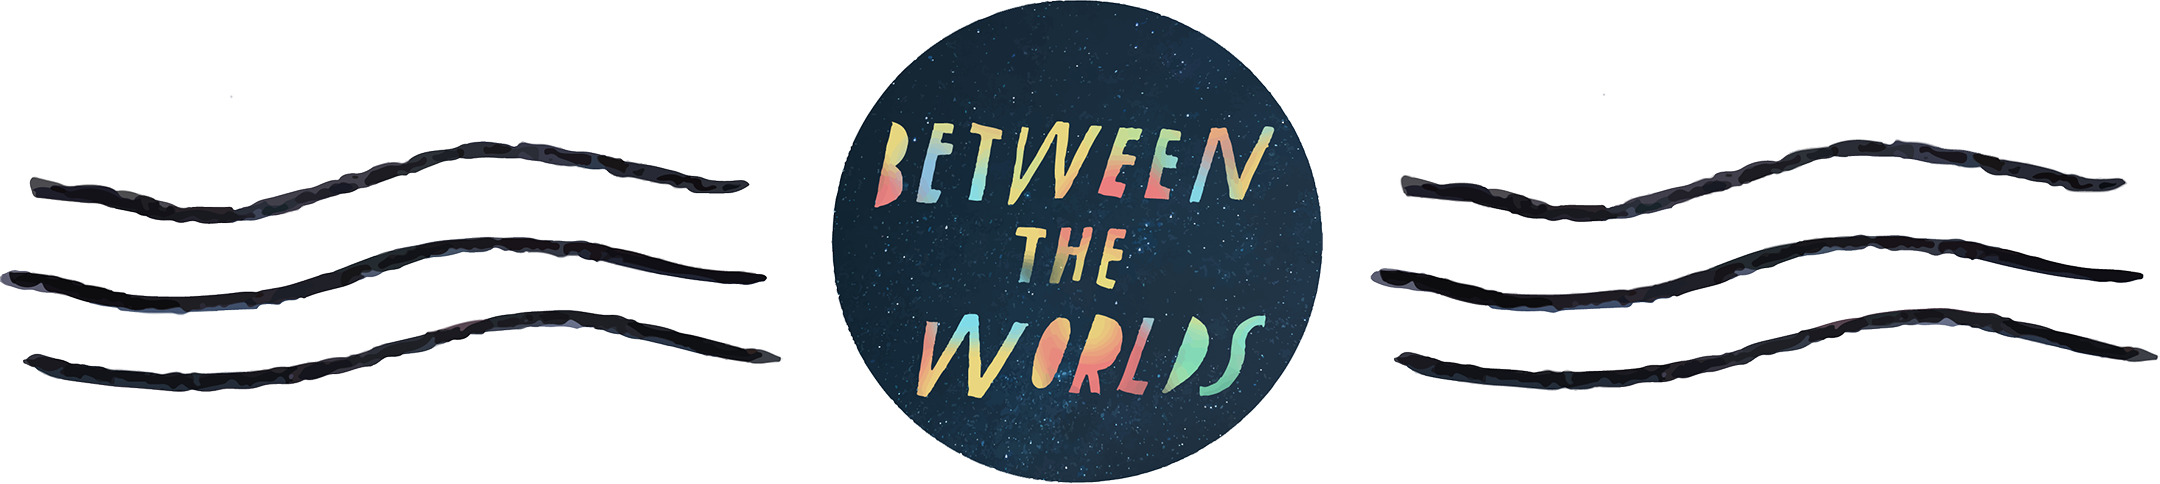 Between The Worlds